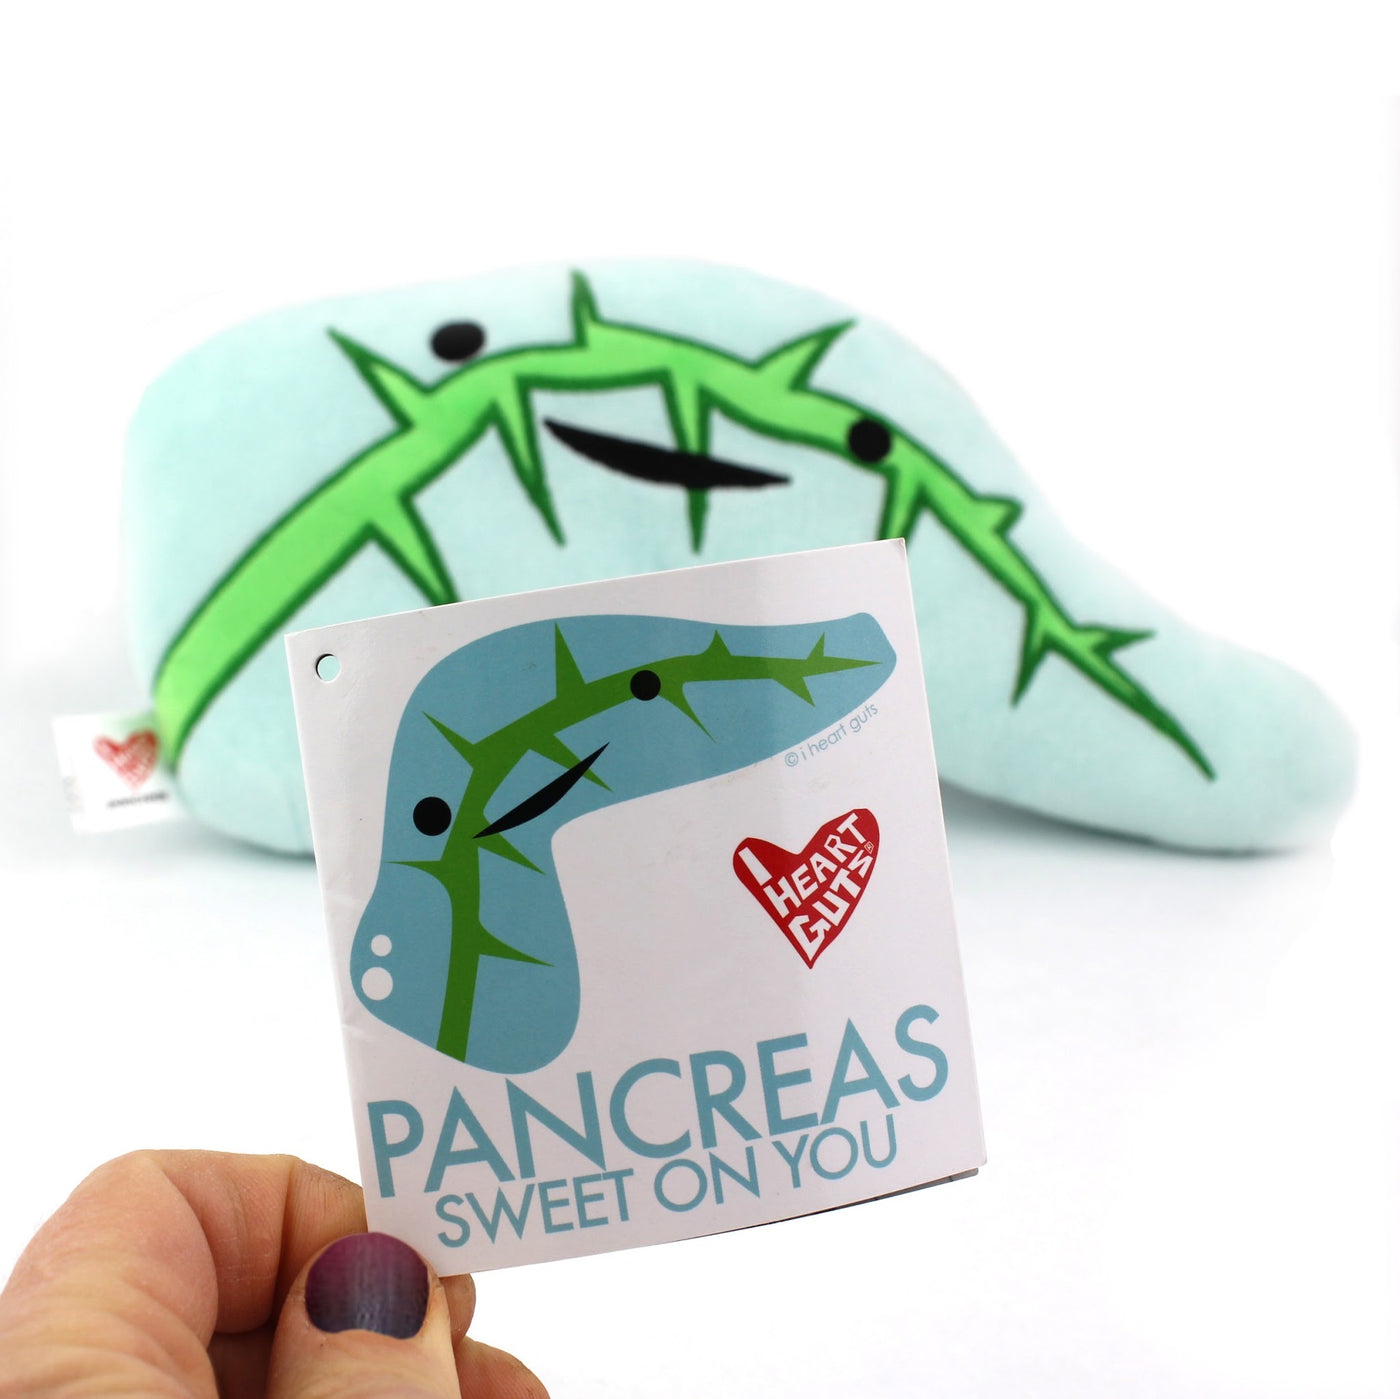 Pancreas Plush - Sweet on You - Plush Organ Stuffed Toy Pillow - I Heart Guts